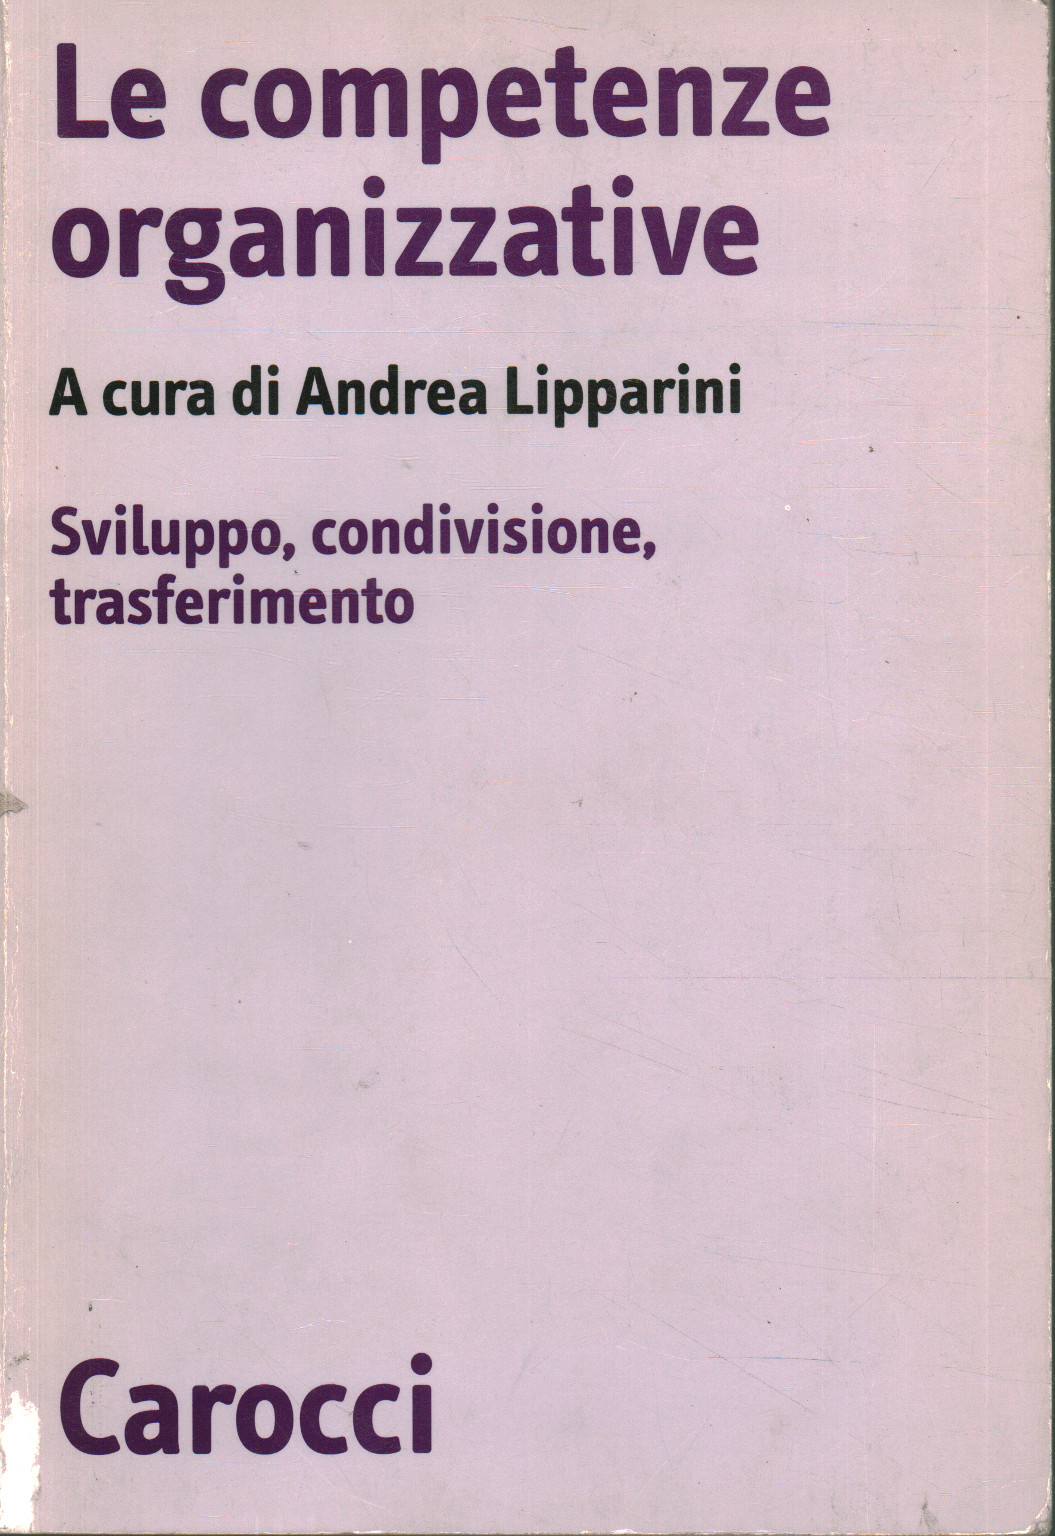 Organizational skills, Andrea Lipparini